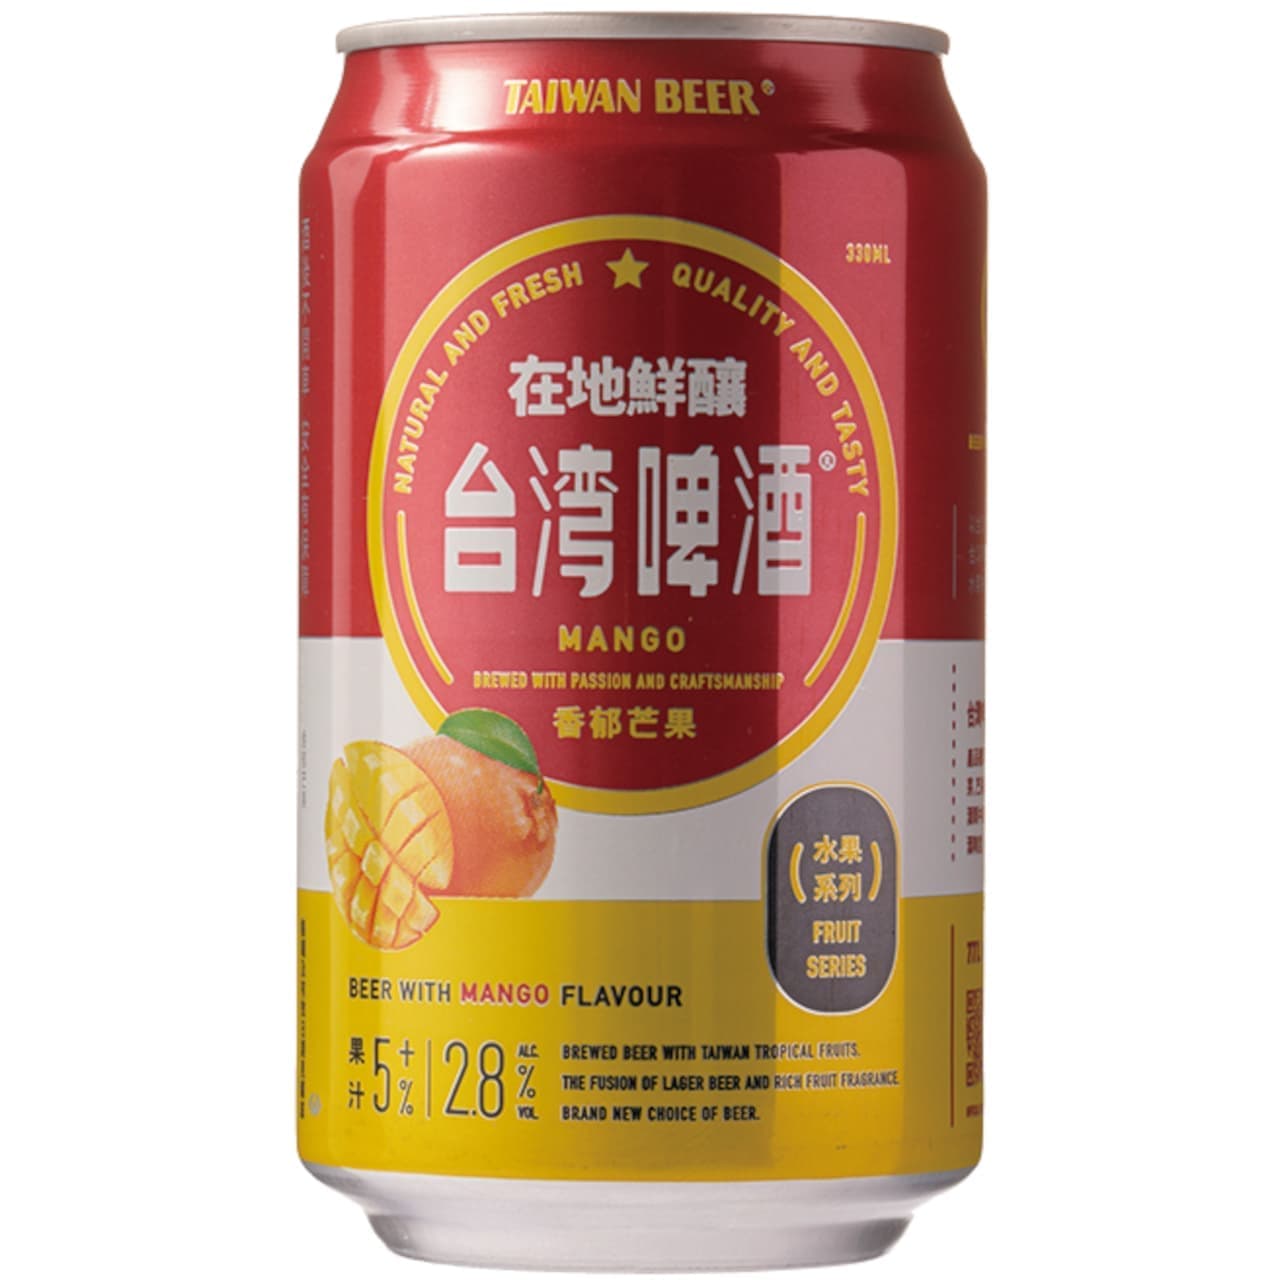 Lawson "Taiwan Gold Tile Beer (can)", "Taiwan Mango Beer", "Taiwan Pineapple Beer